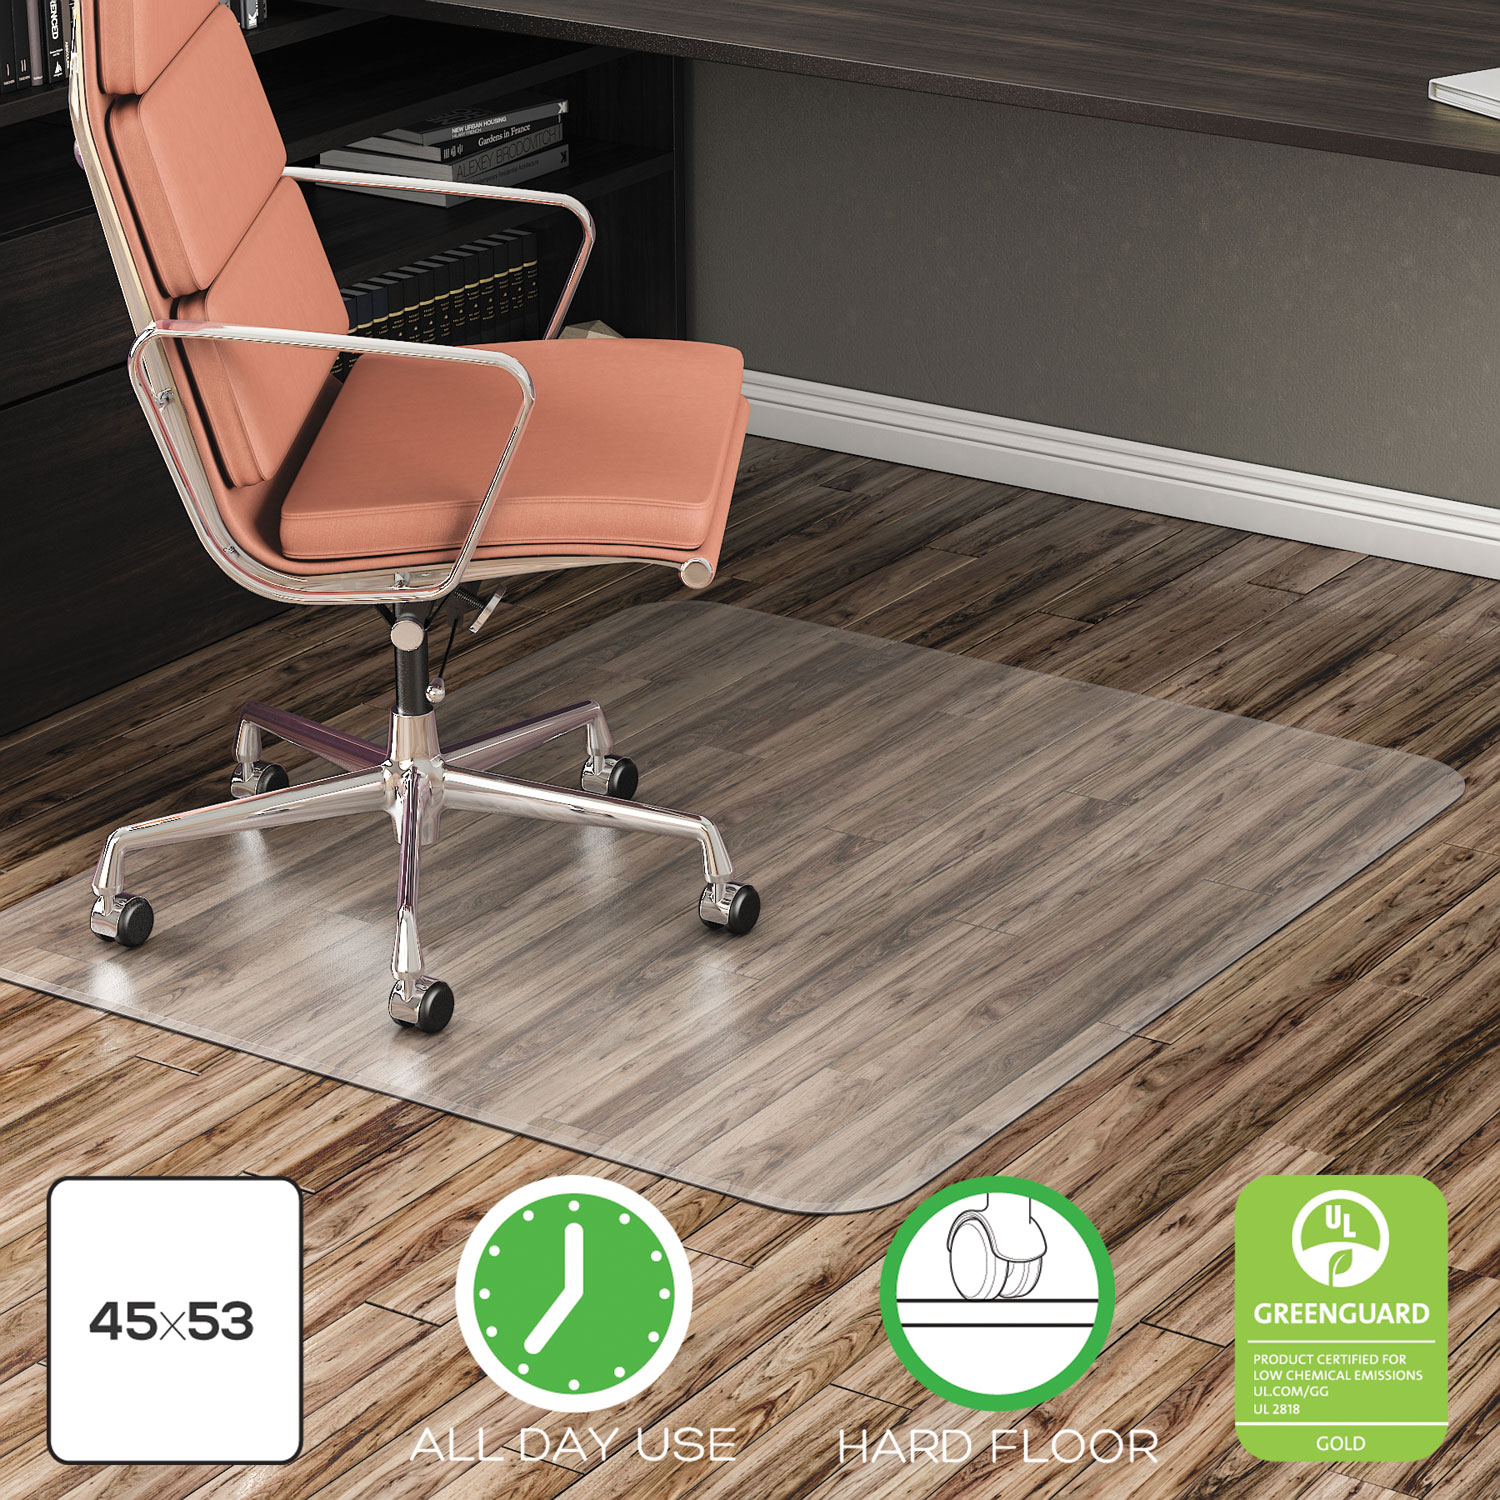  deflecto CM21242COM EconoMat All Day Use Chair Mat for Hard Floors, 45 x 53, Clear (DEFCM21242COM) 